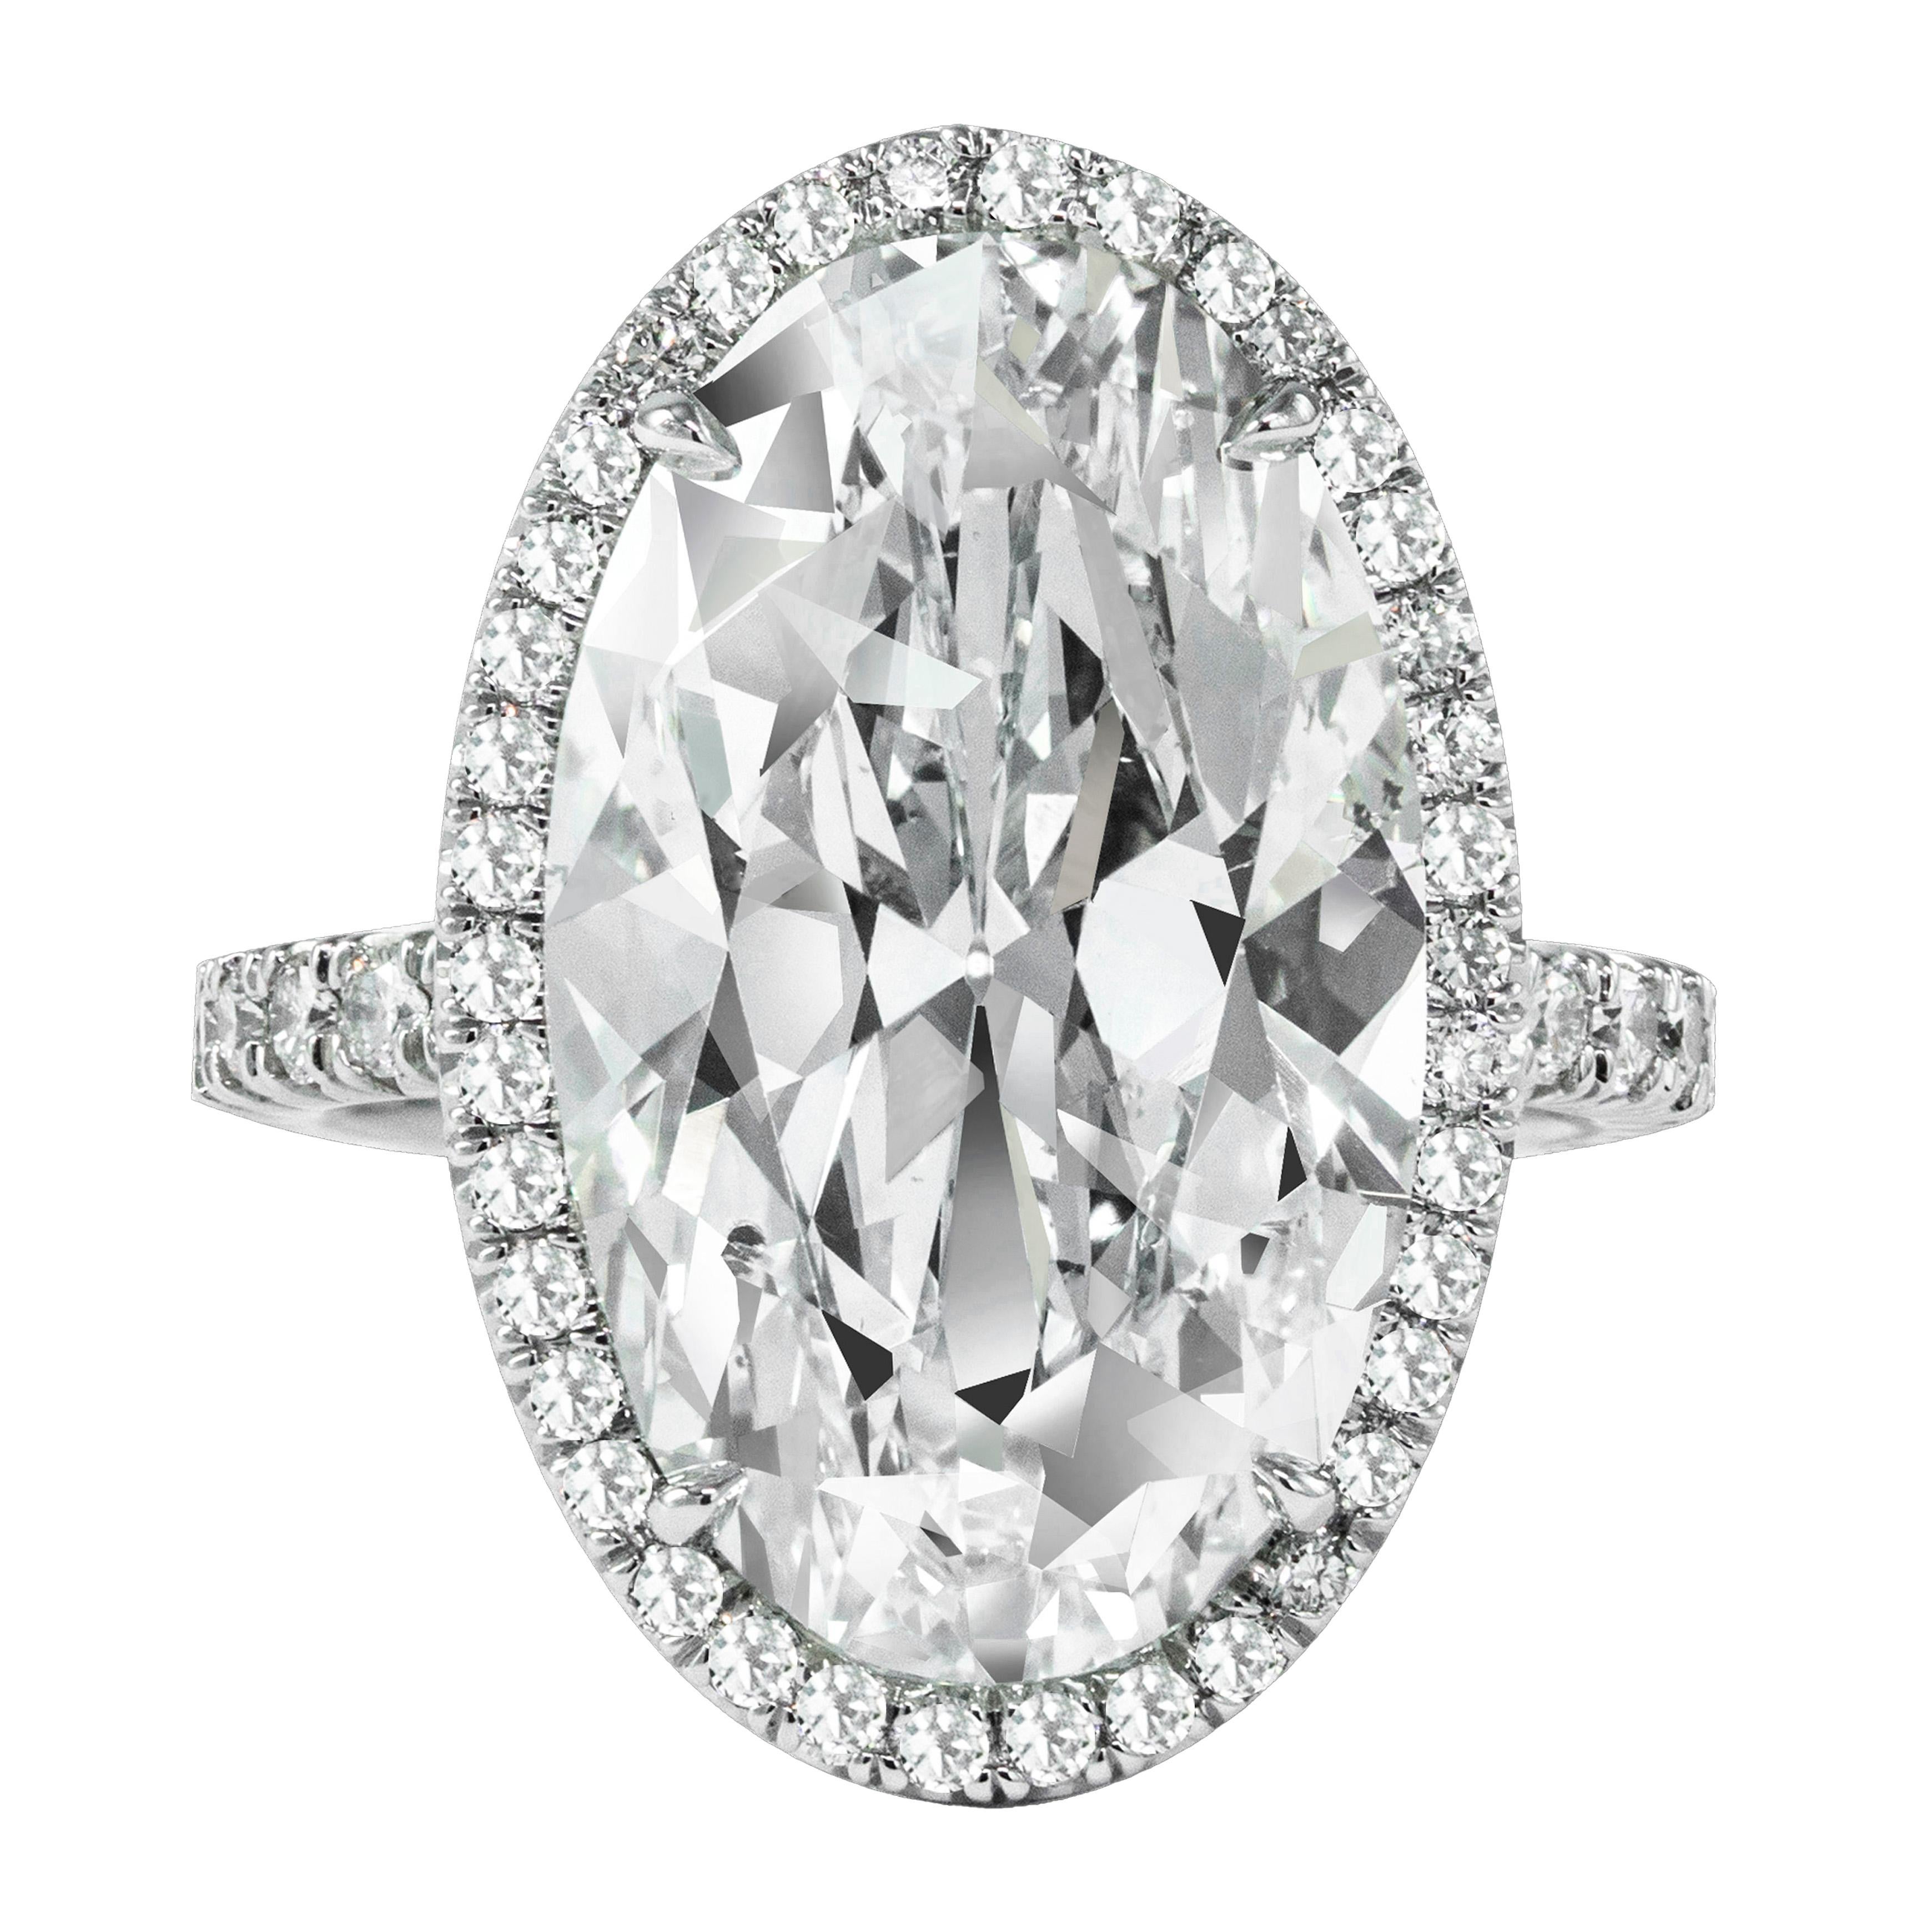 Roman Malakov GIA Certified 10.09 Carats Oval Cut Diamond Halo Engagement Ring